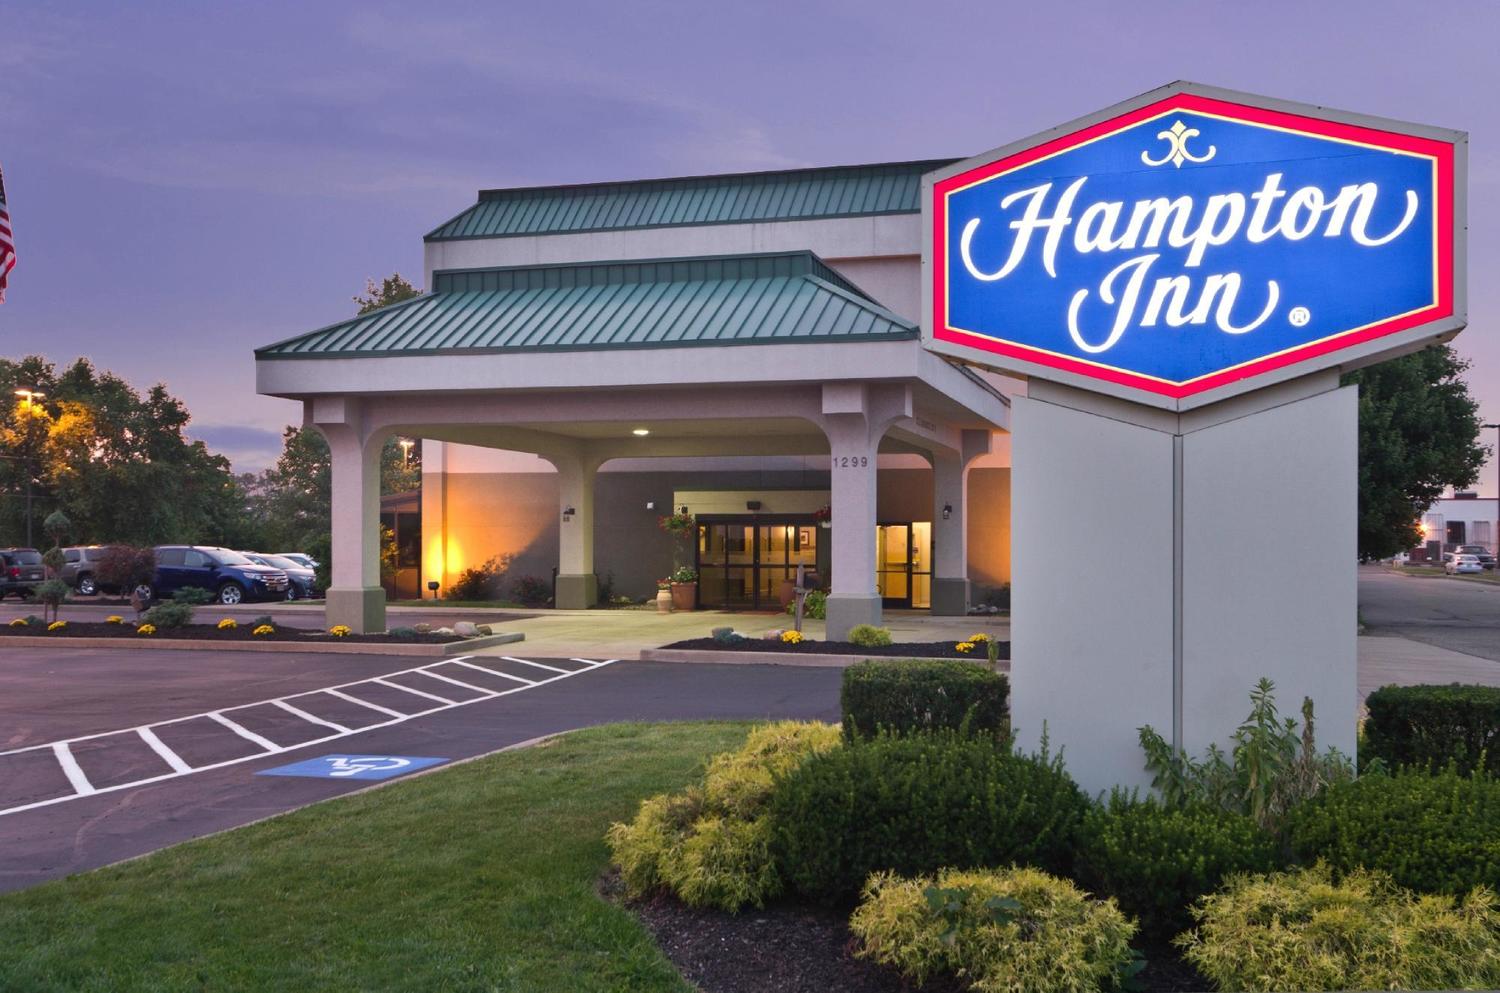 Hampton Inn New Philadelphia, New Philadelphia, OH Jobs | Hospitality